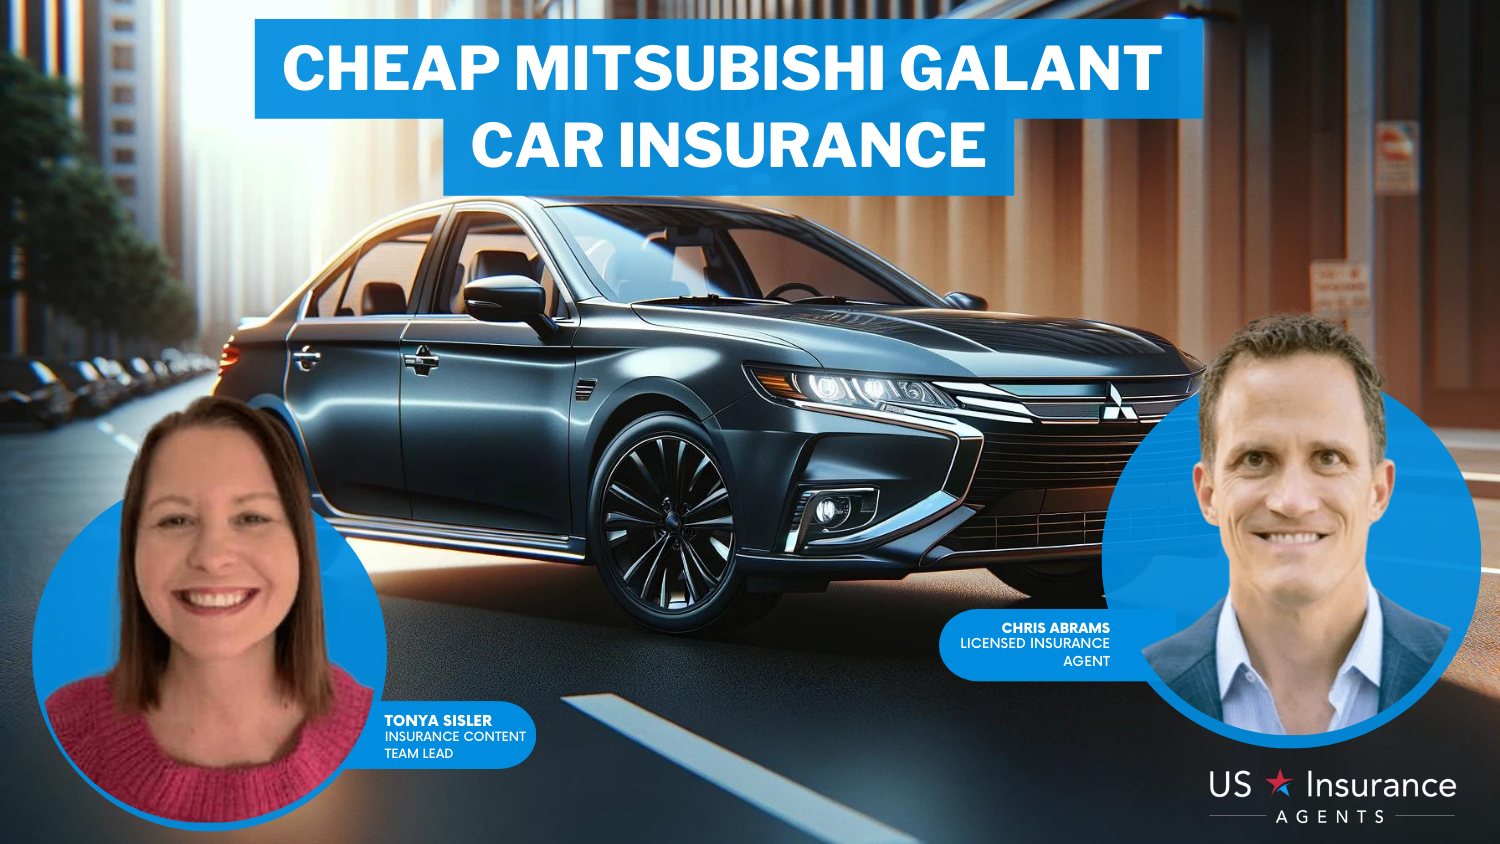 Cheap Mitsubishi Galant Car Insurance: The General, Progressive, and Farmers